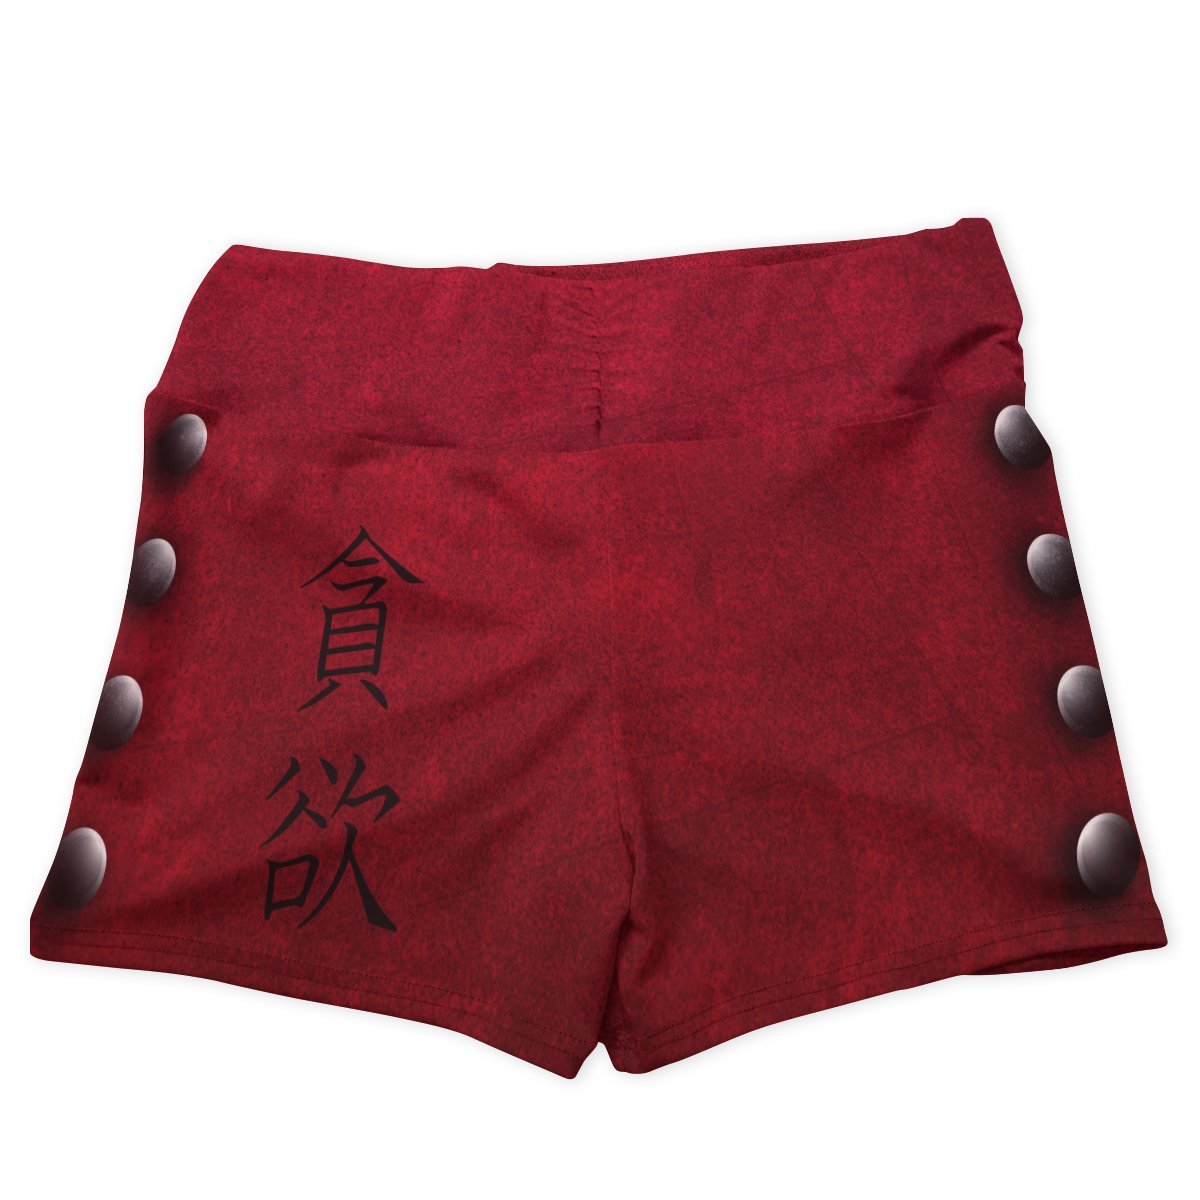 ban fox active wear set 318745 - Anime Swimsuits